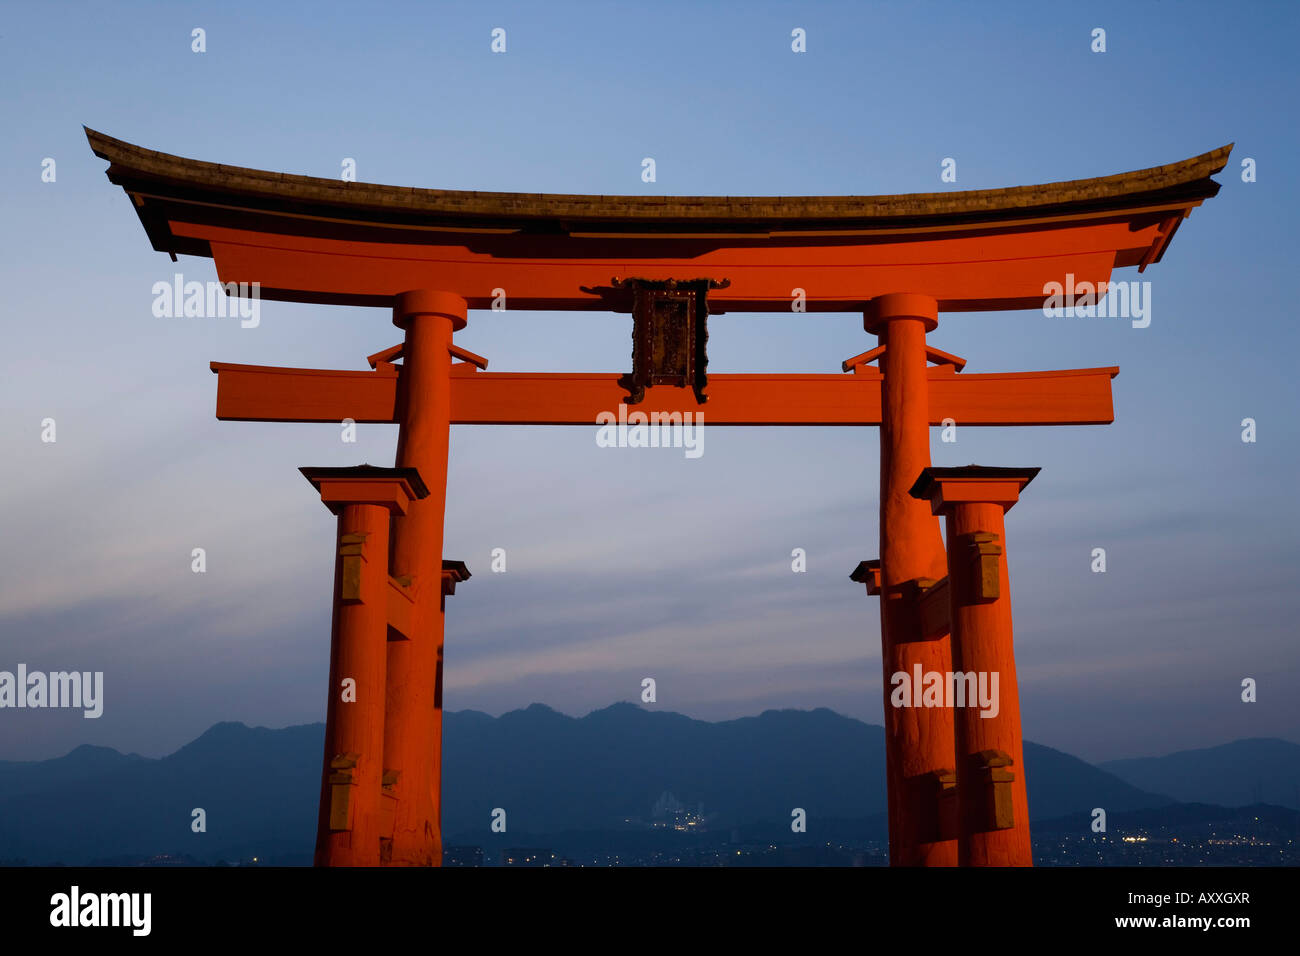 Floating gate torii di sacrario scintoista, santuario di Itsukushima, Miyajima, area di Hiroshima, isola di Honshu, Giappone Foto Stock